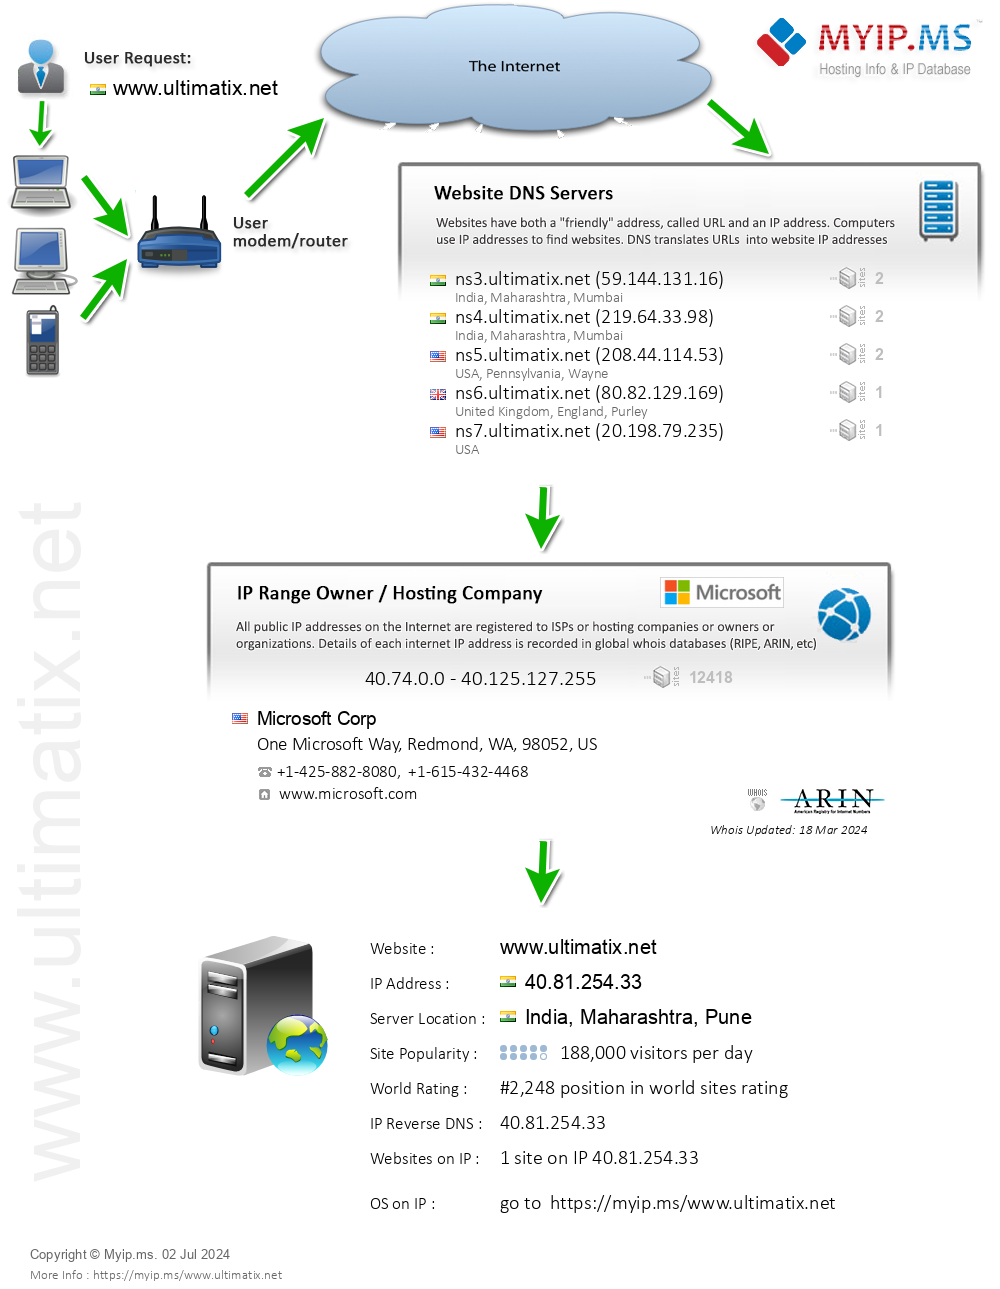 Ultimatix.net - Website Hosting Visual IP Diagram